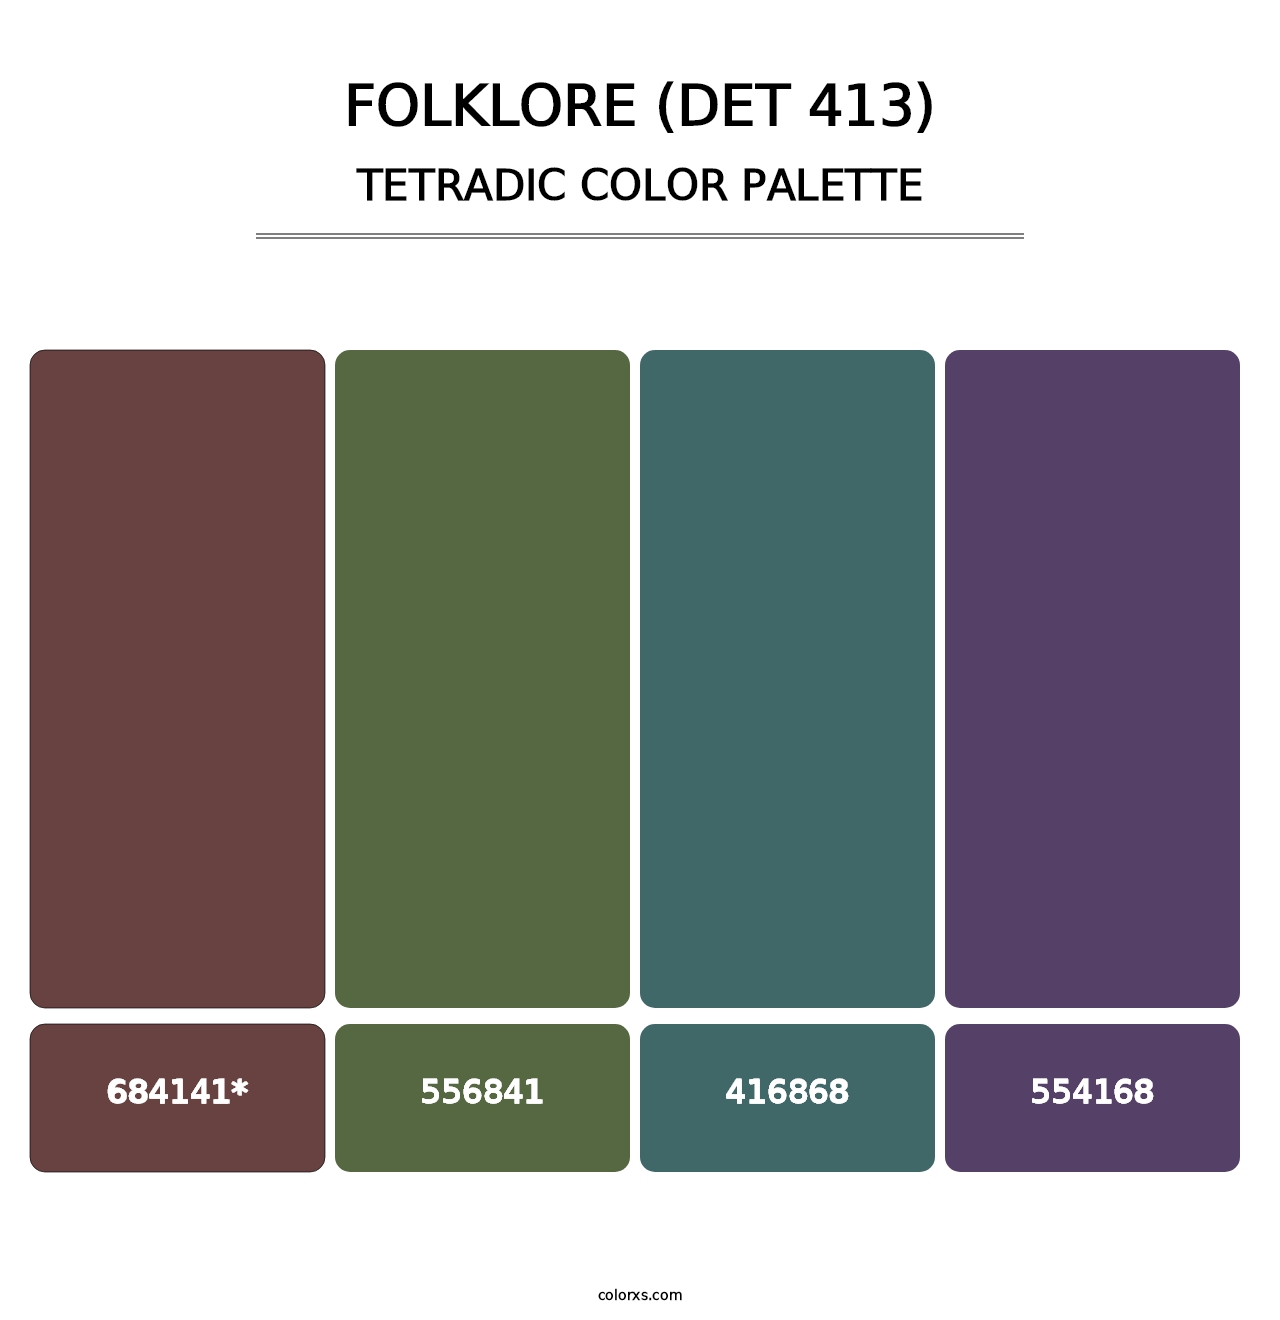 Folklore (DET 413) - Tetradic Color Palette